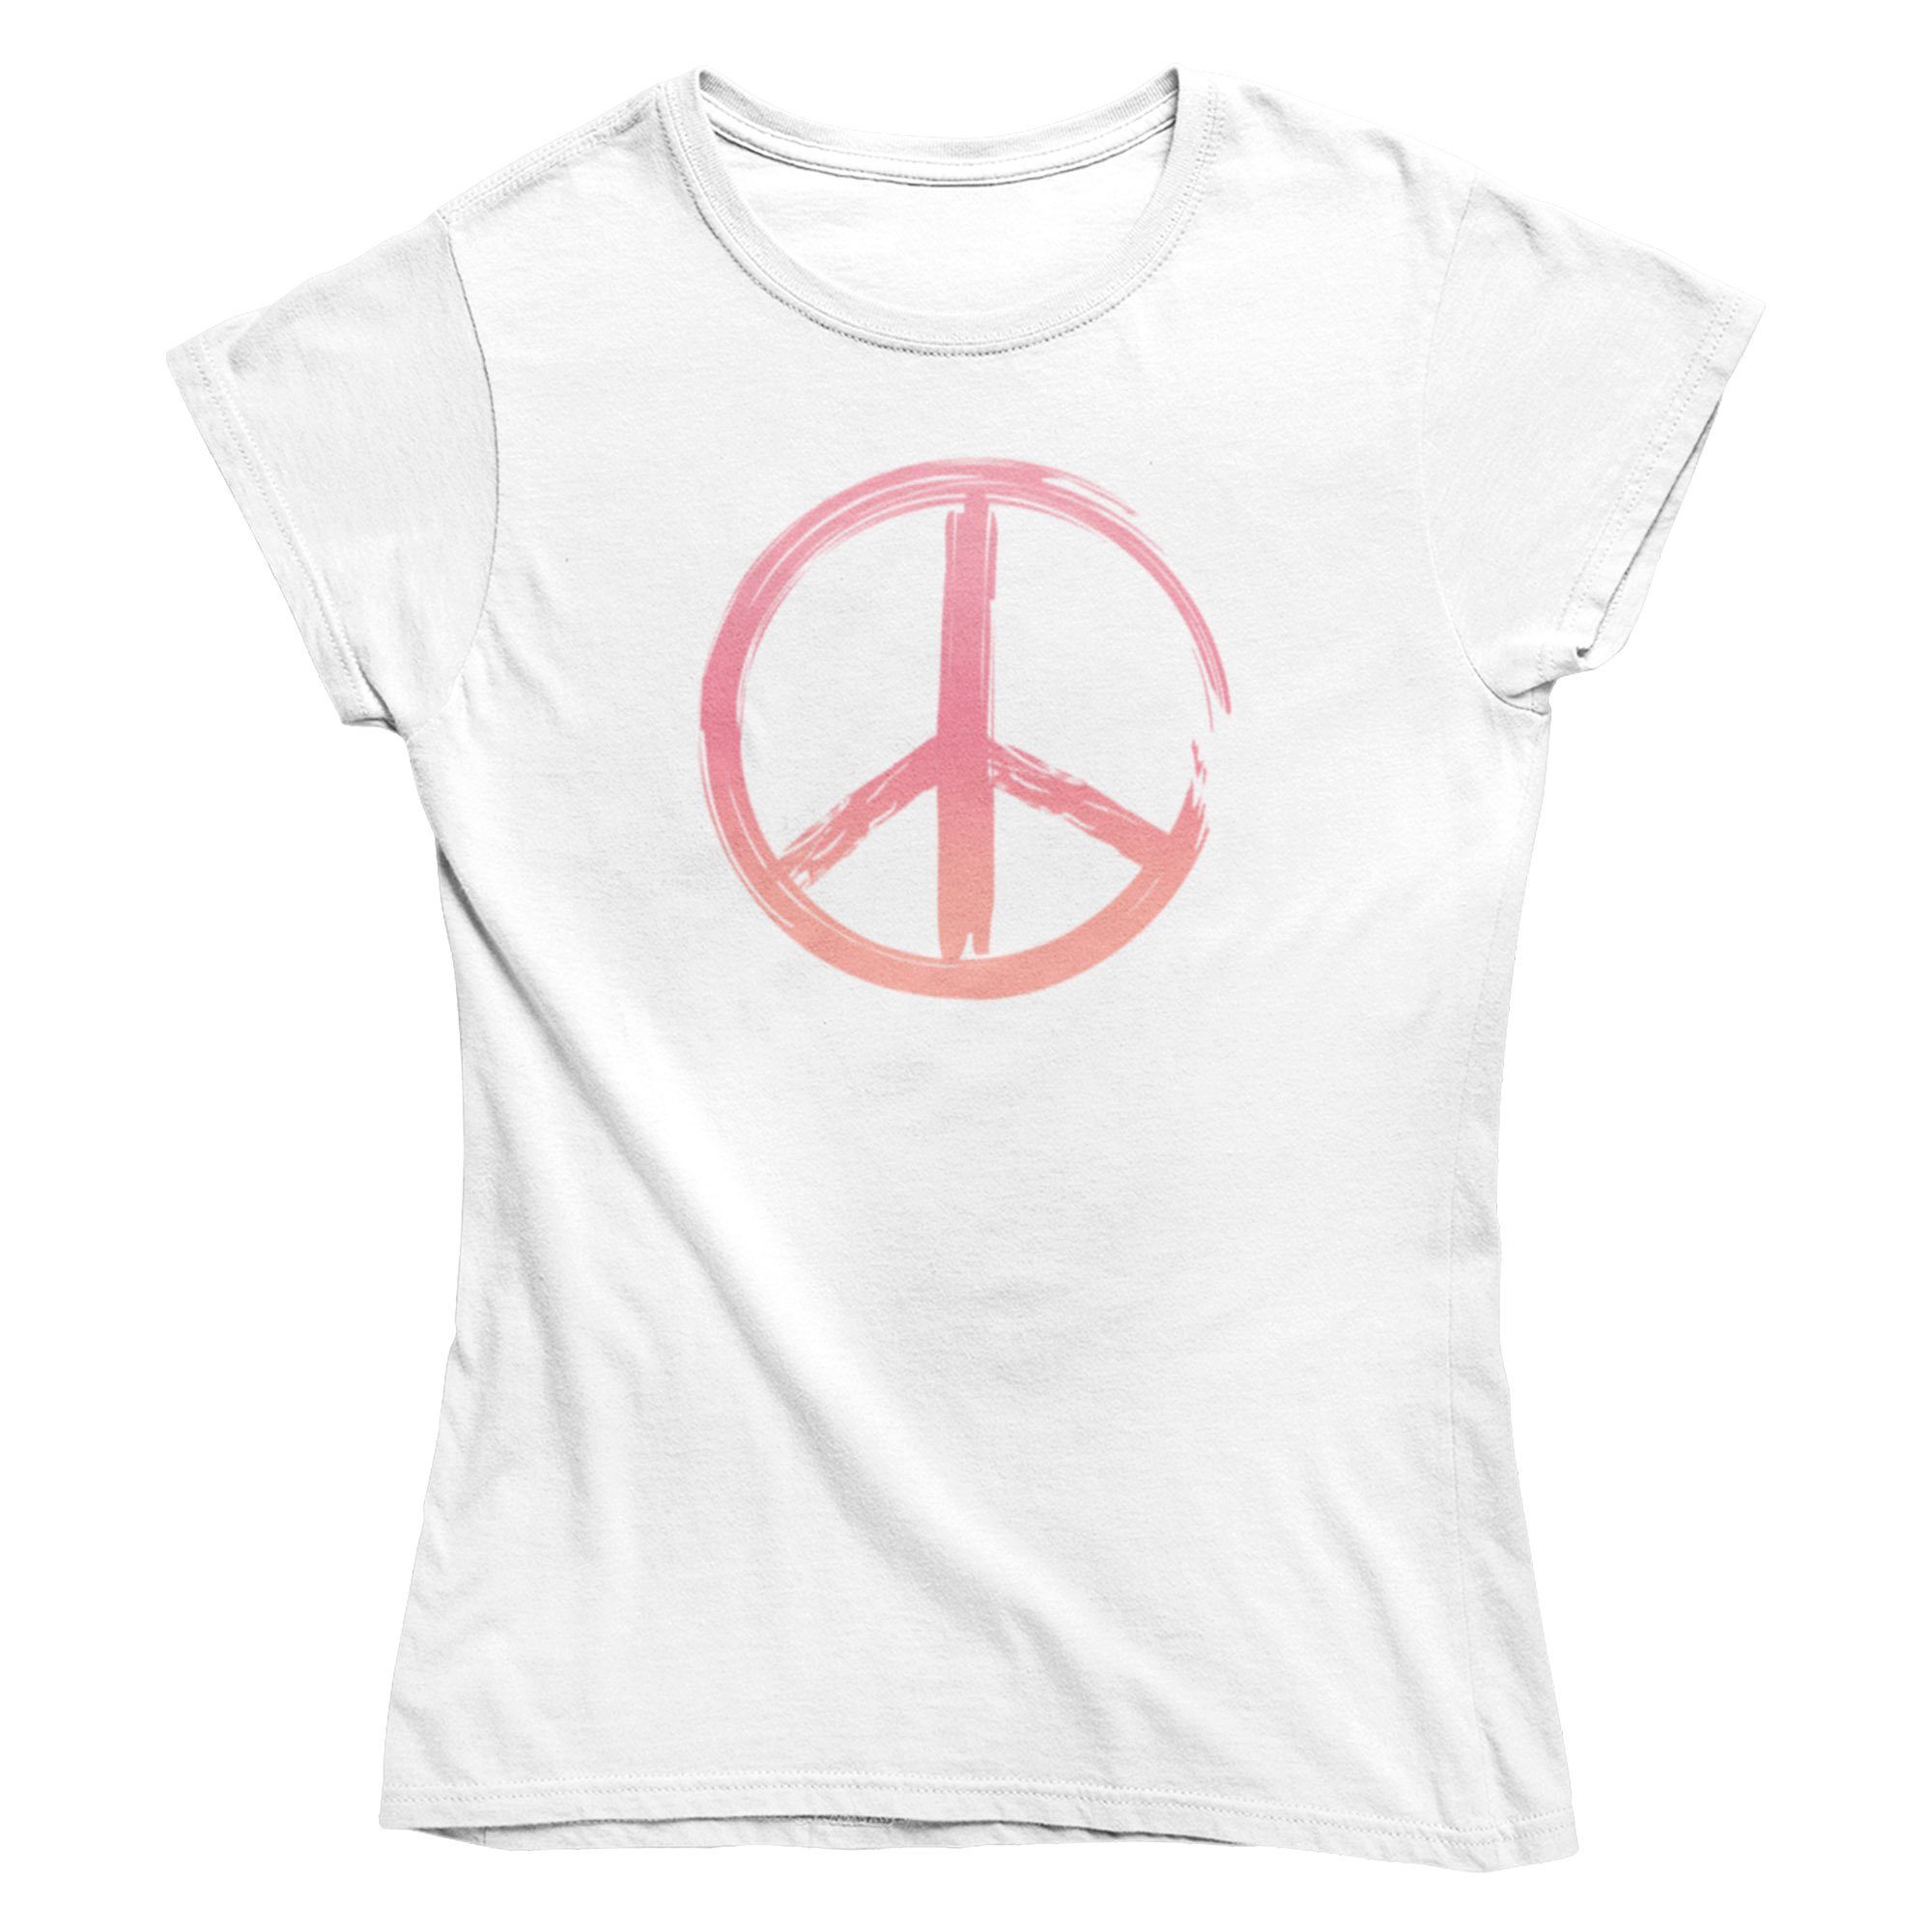 Verkaufspreis mamino Fashion T-Shirt T sign Shirt Damen -Peace